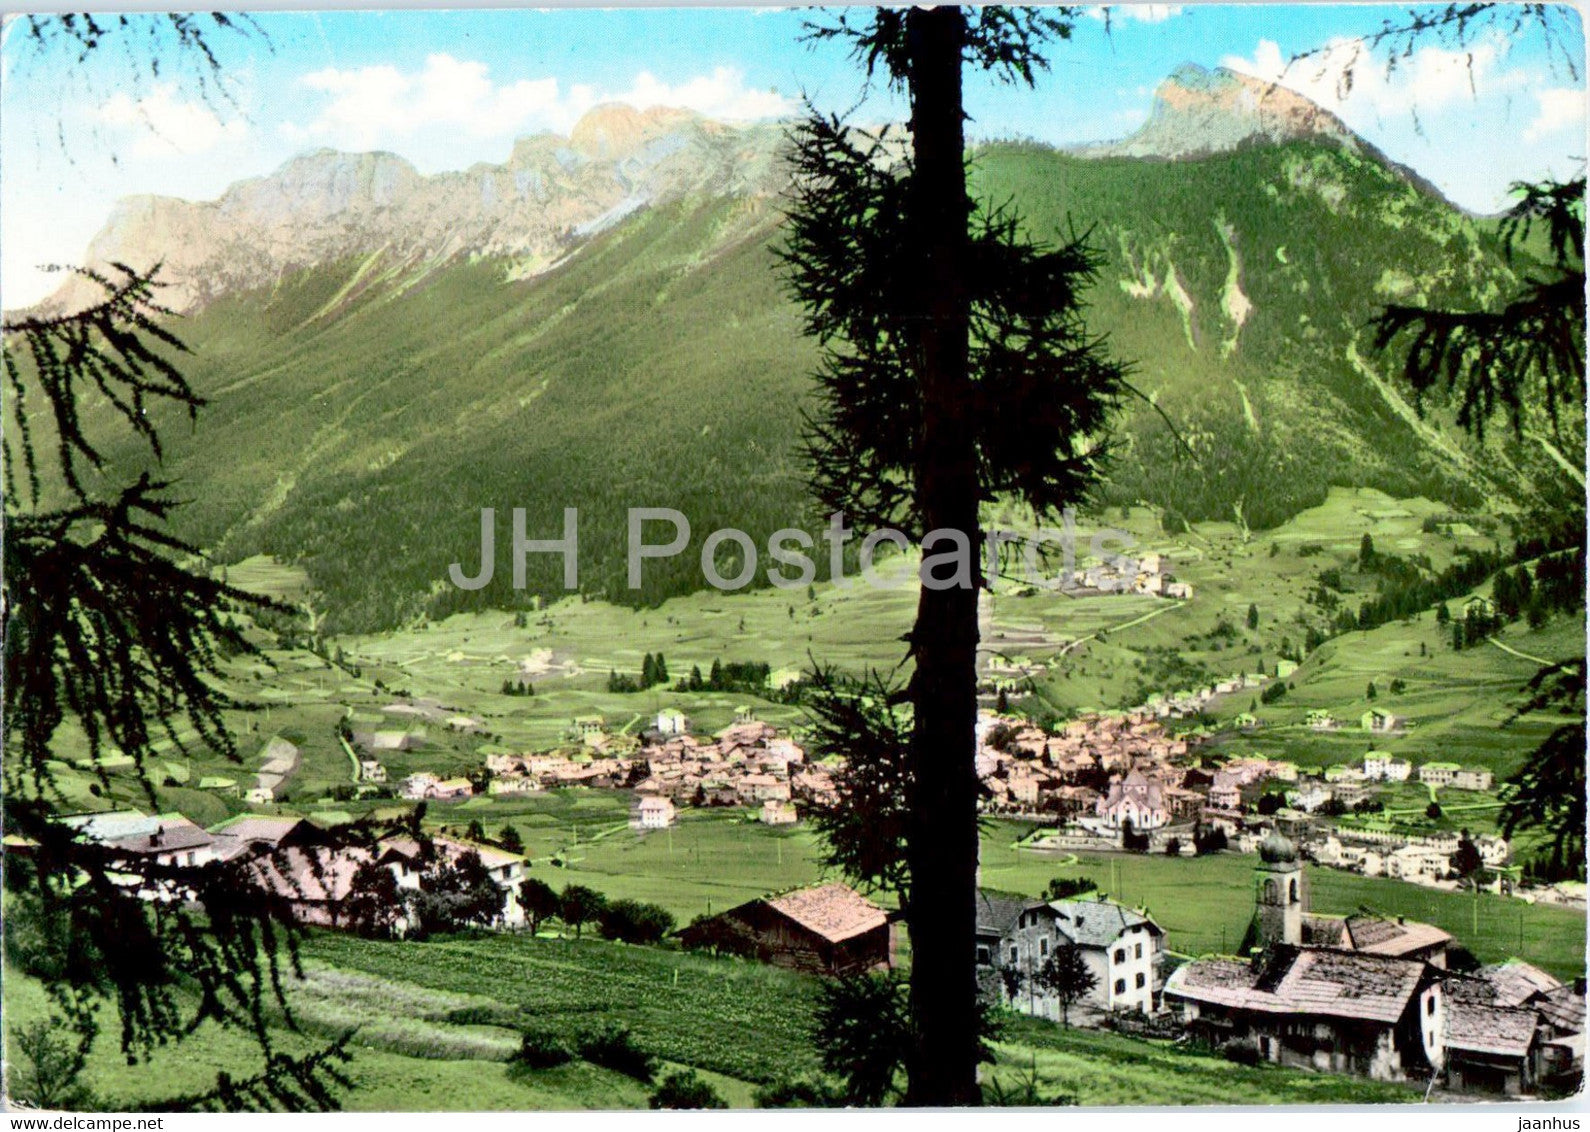 Moena di Fiemme 1200 m - Dolomiti - 1966 - Italy - used - JH Postcards